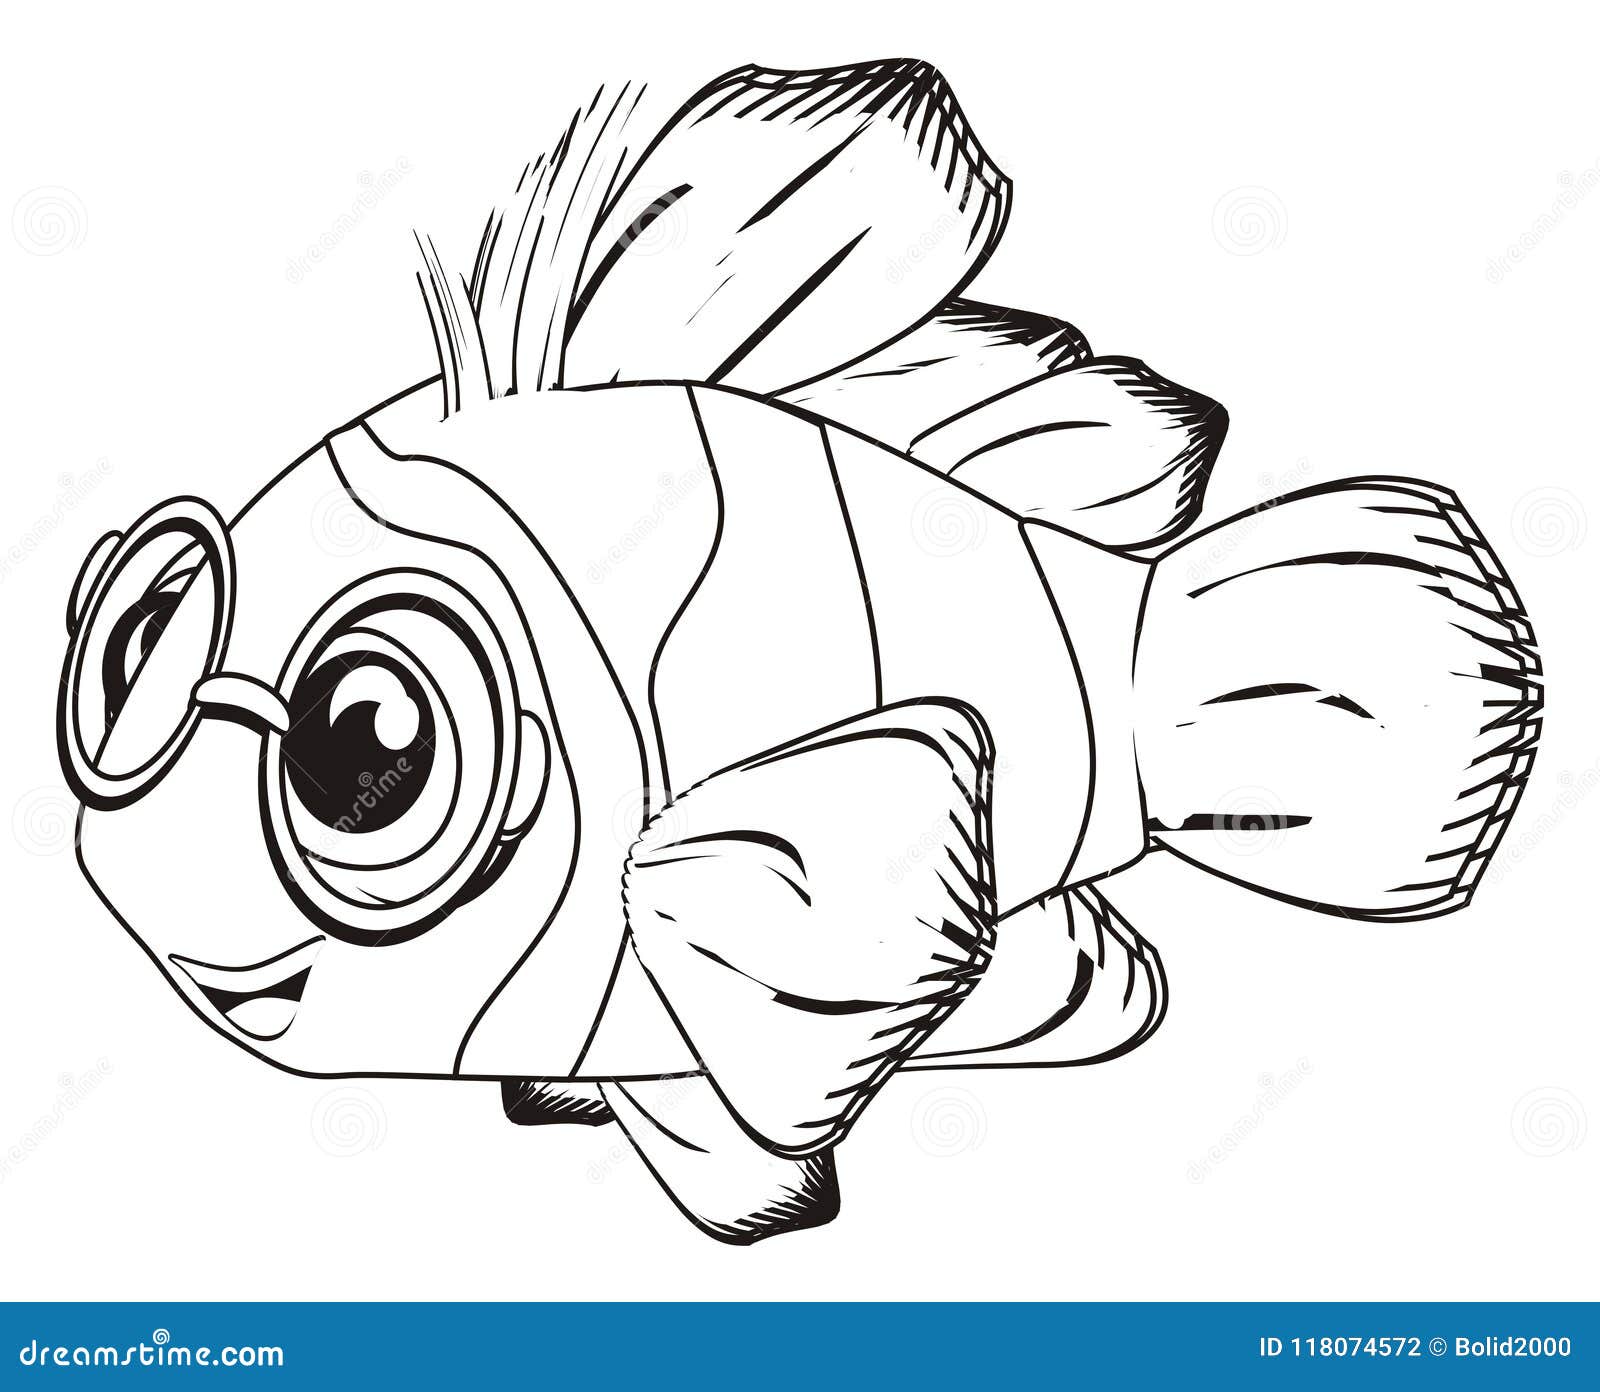 Coloring fish in glasses stock illustration. Illustration of swim -  118074572